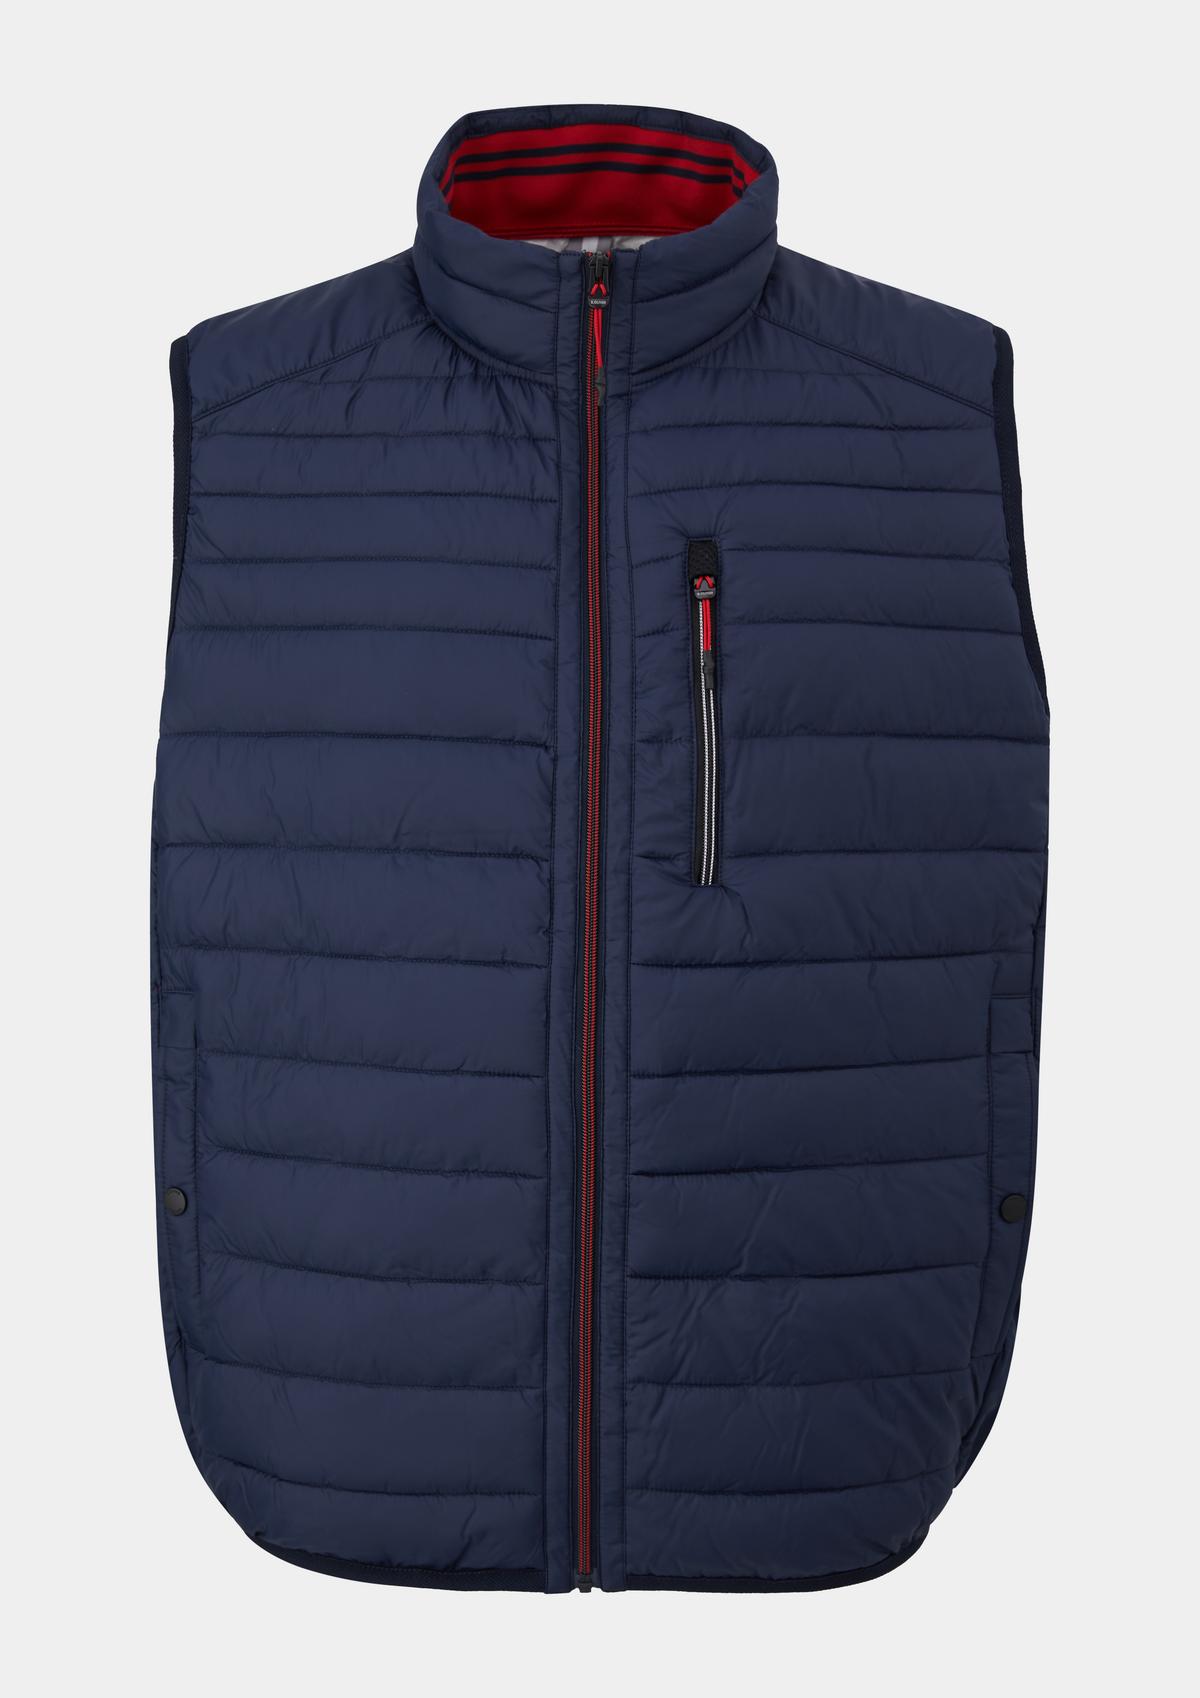 Shop jackets & coats in the s.Oliver online shop now | s.Oliver